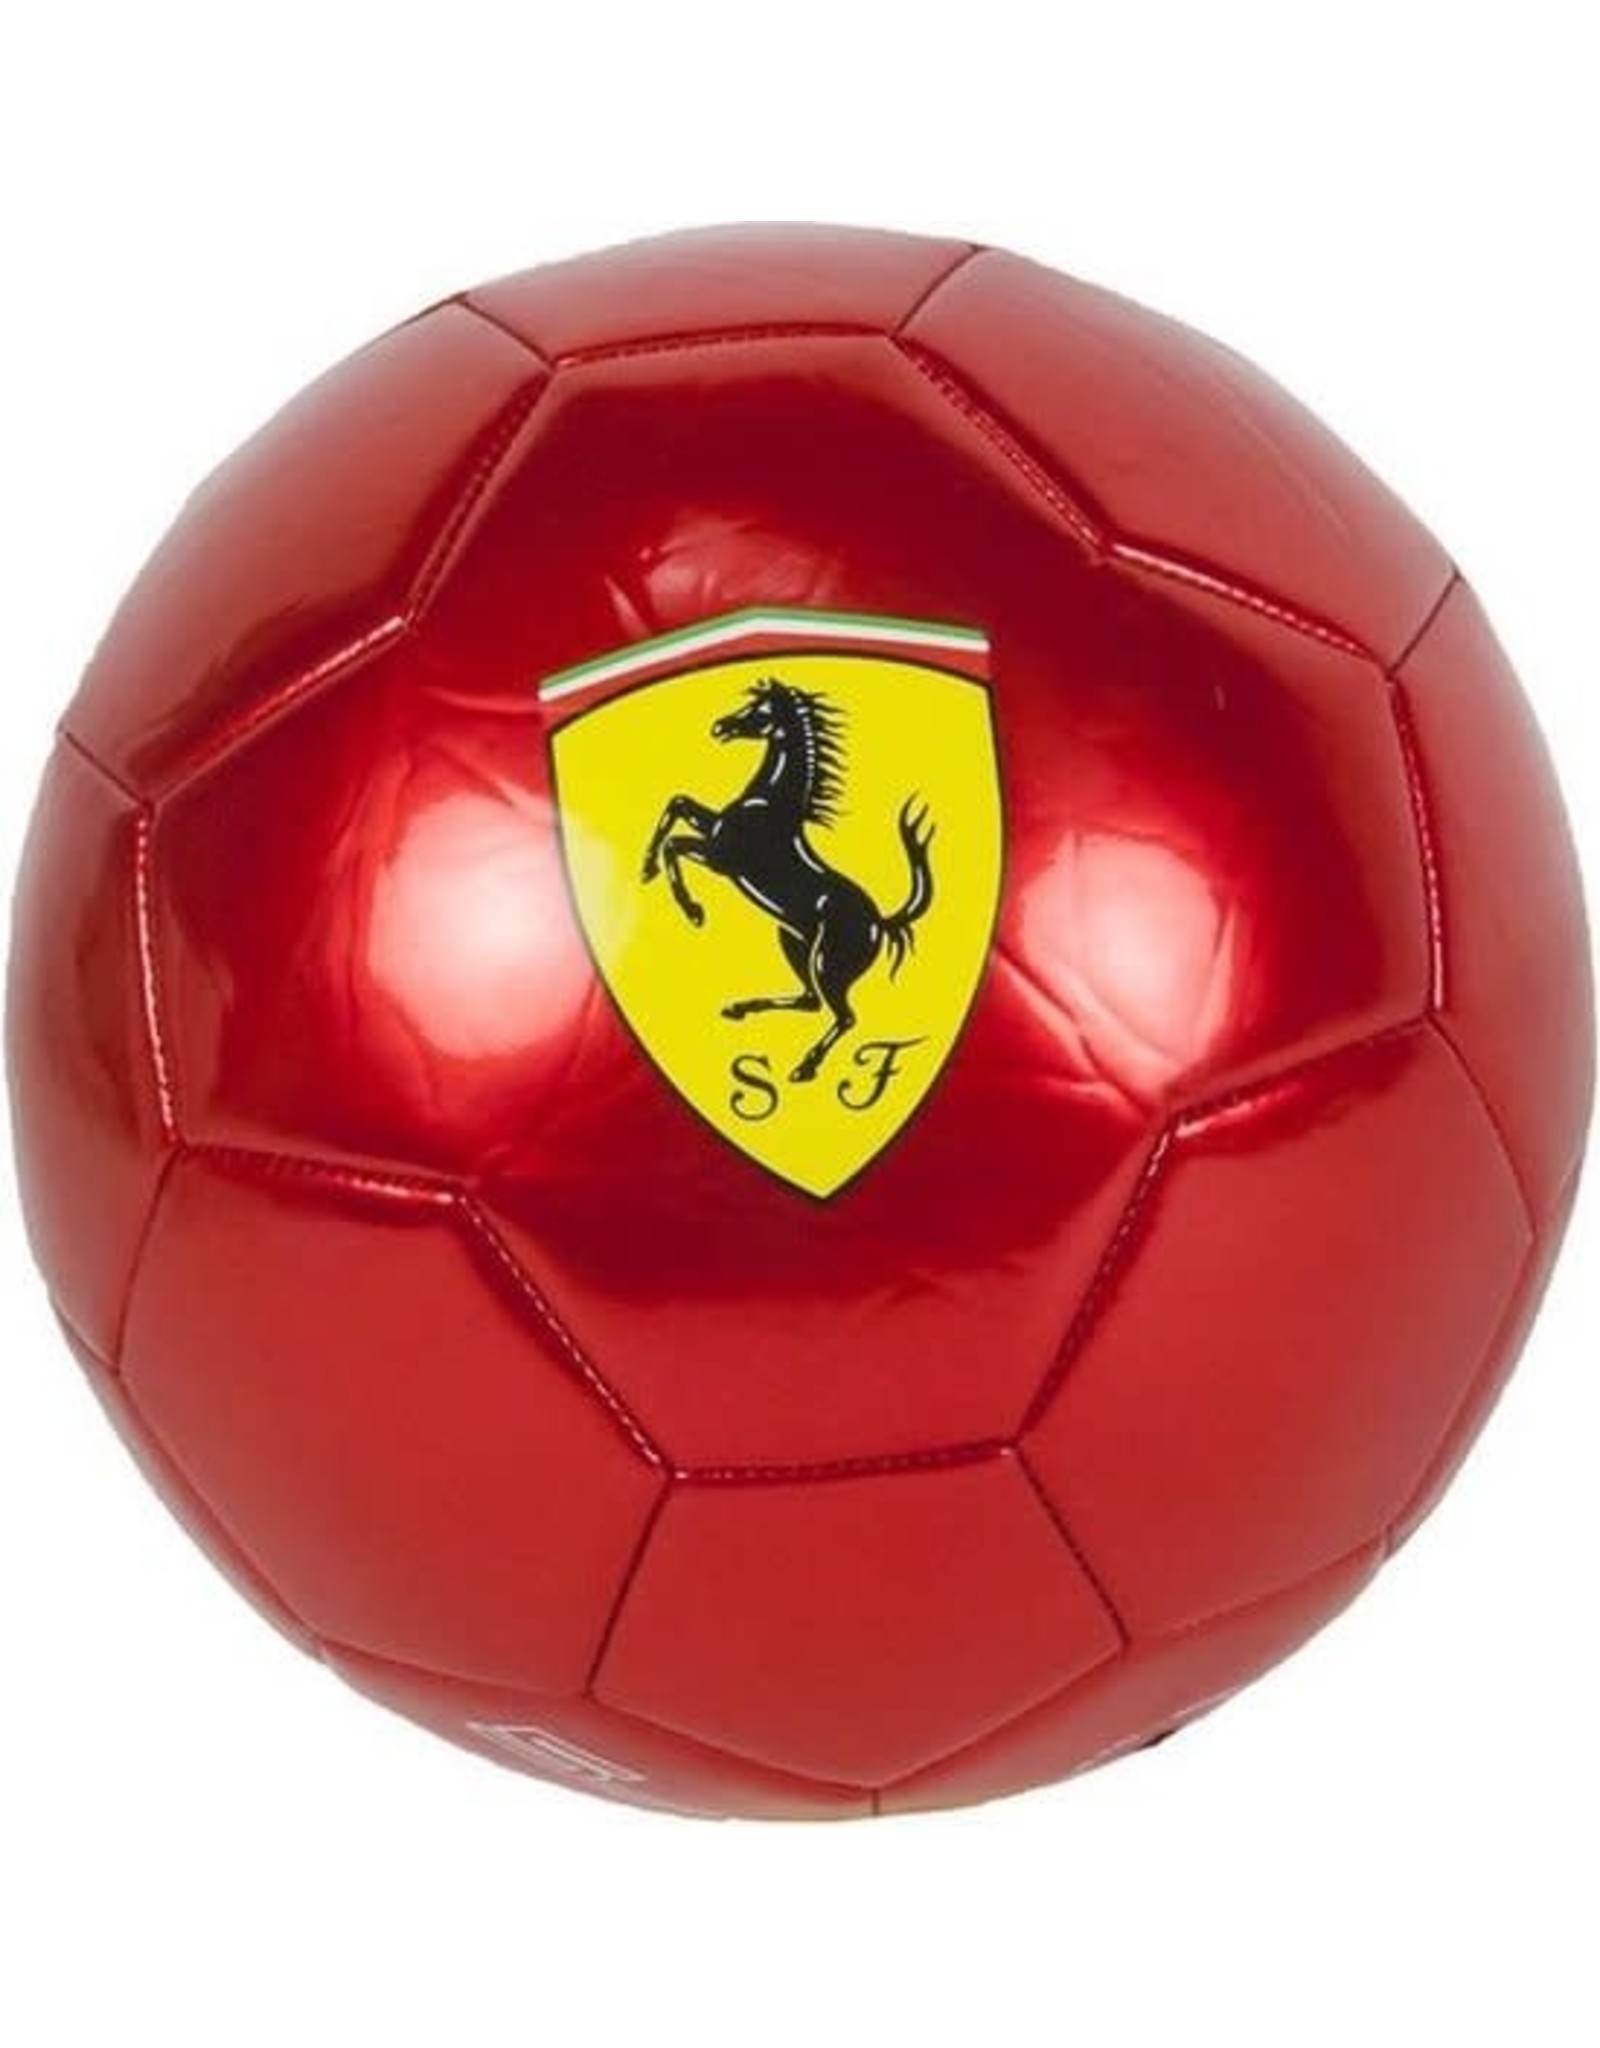 Ferrari Voetbal Metallic Rood maat 5